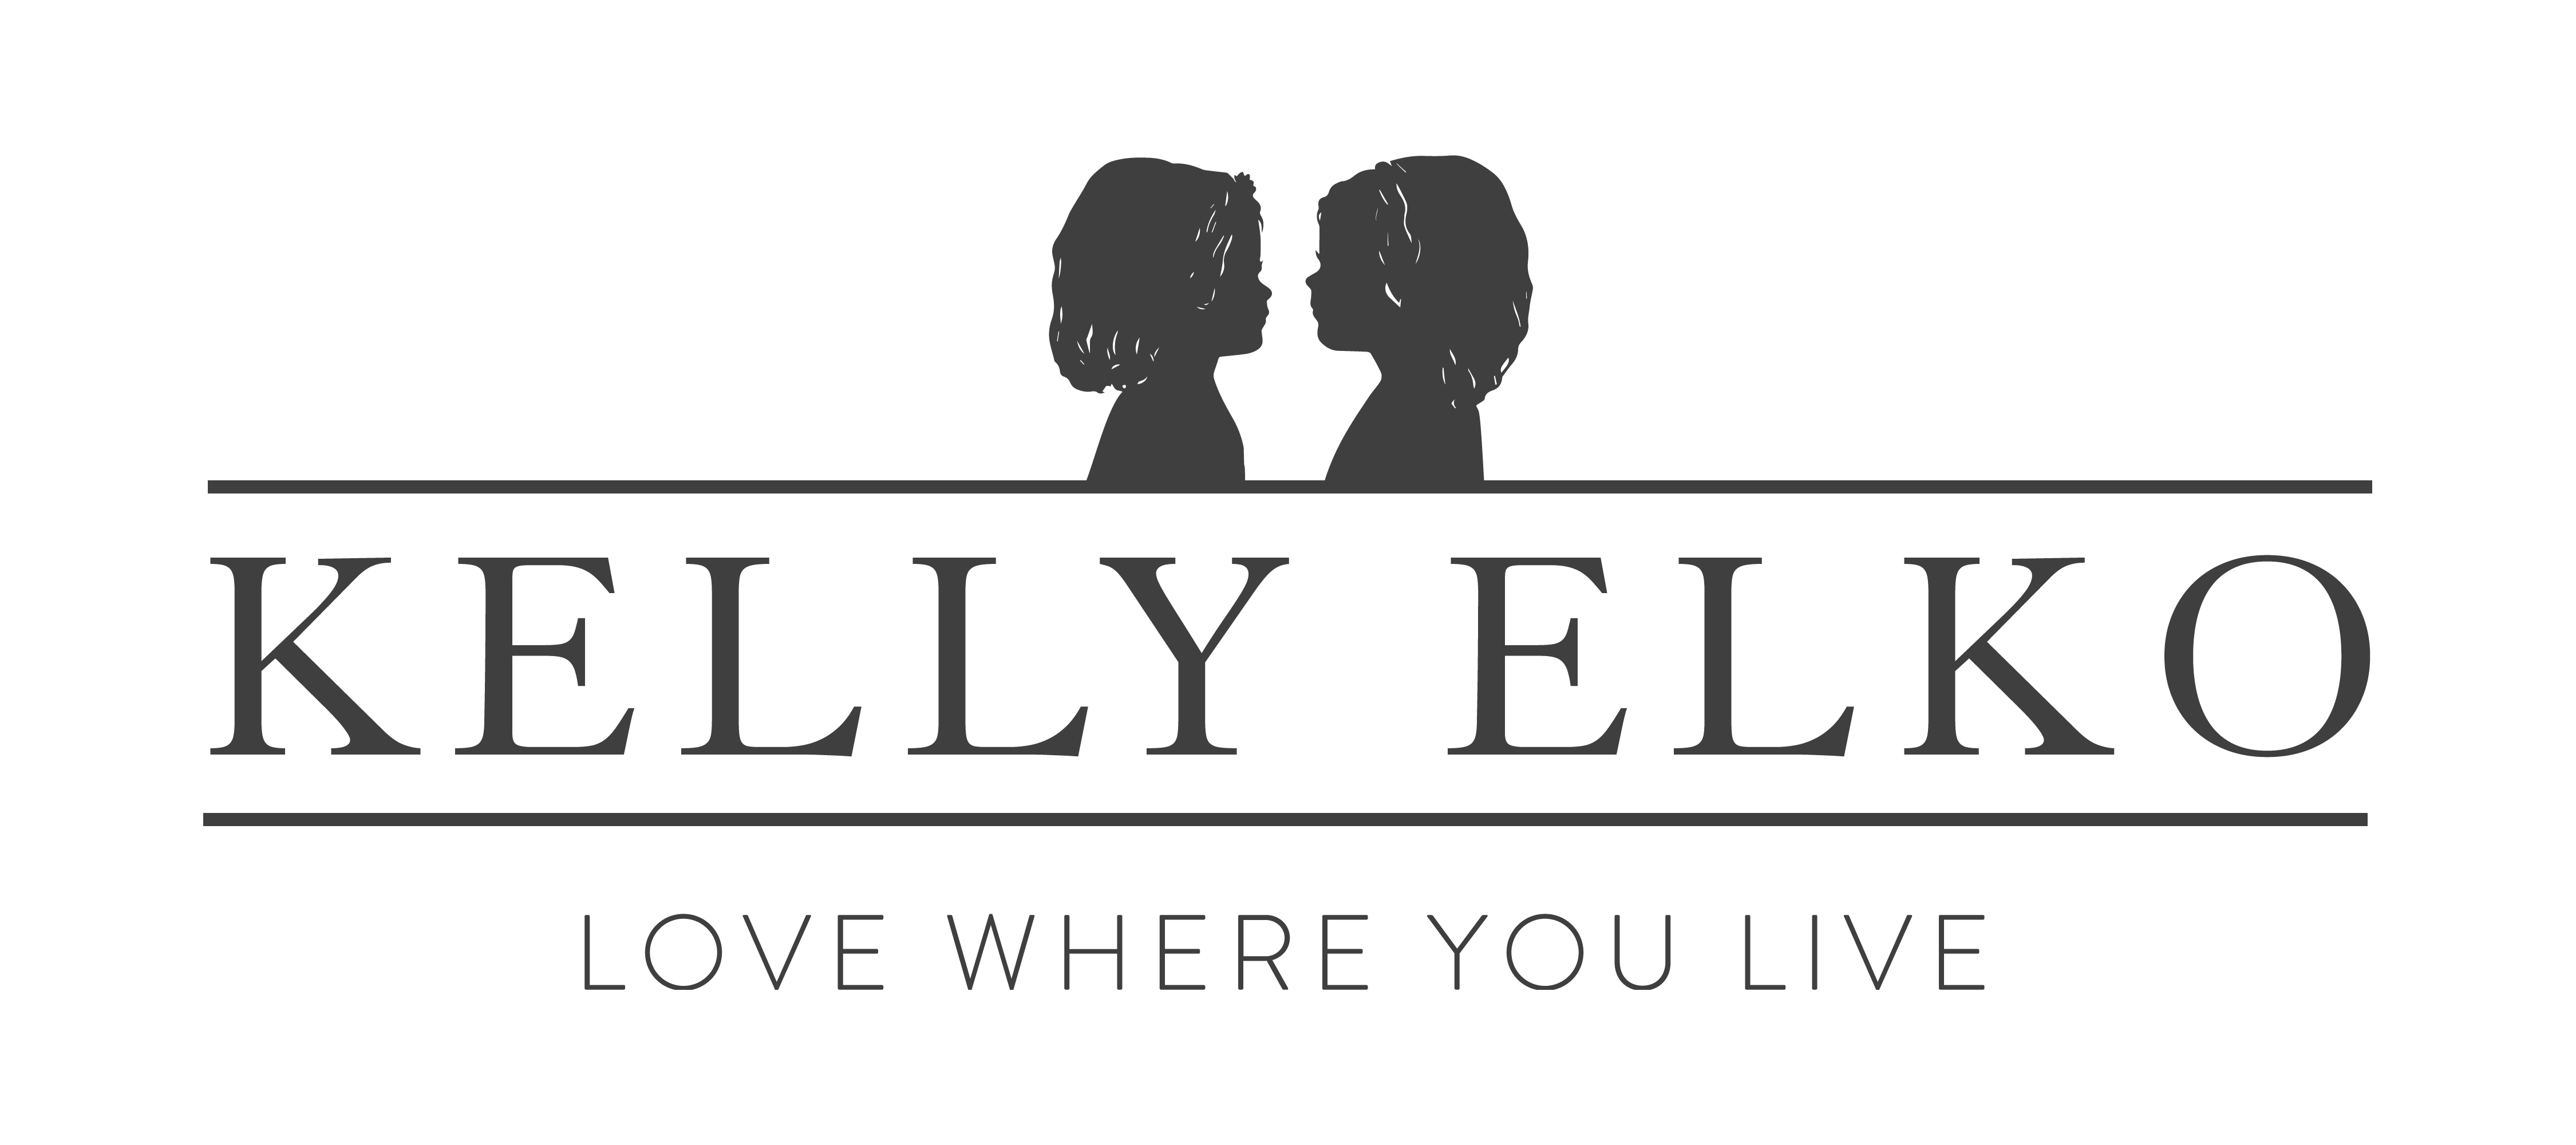 Kelly Elko blog